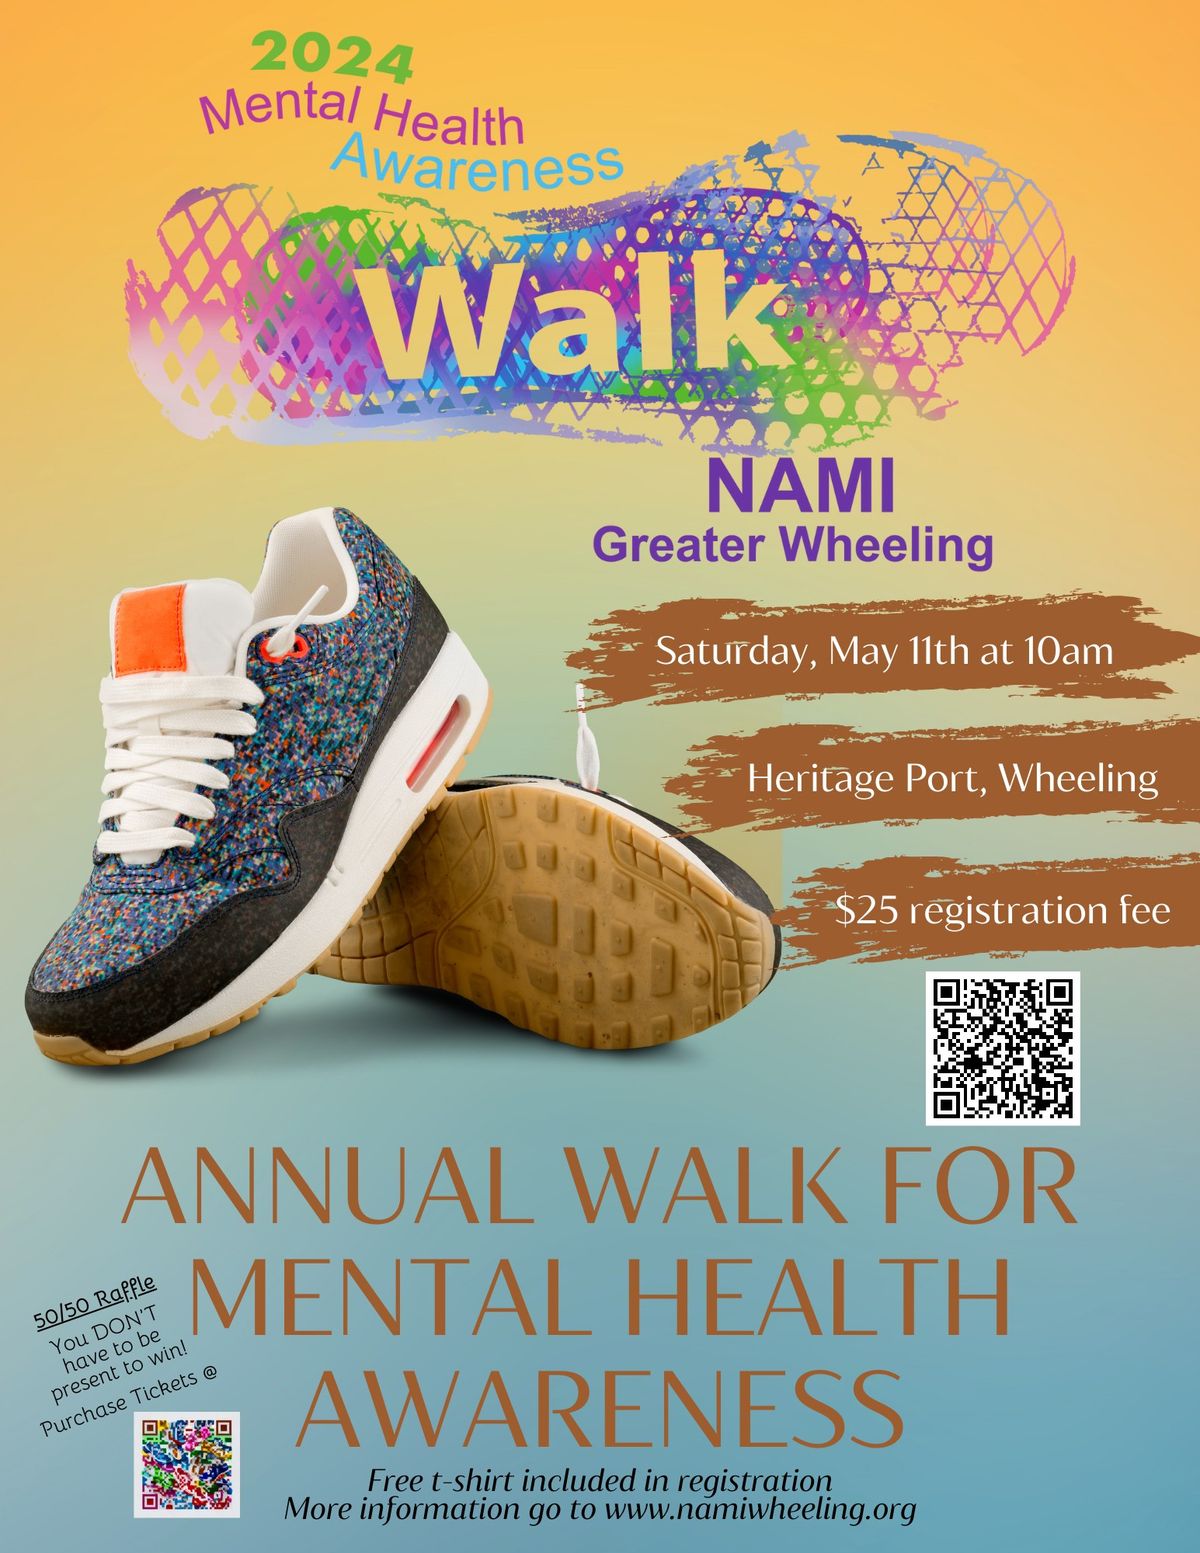 NAMI Greater Wheeling Annual Walk for Mental Health Awareness